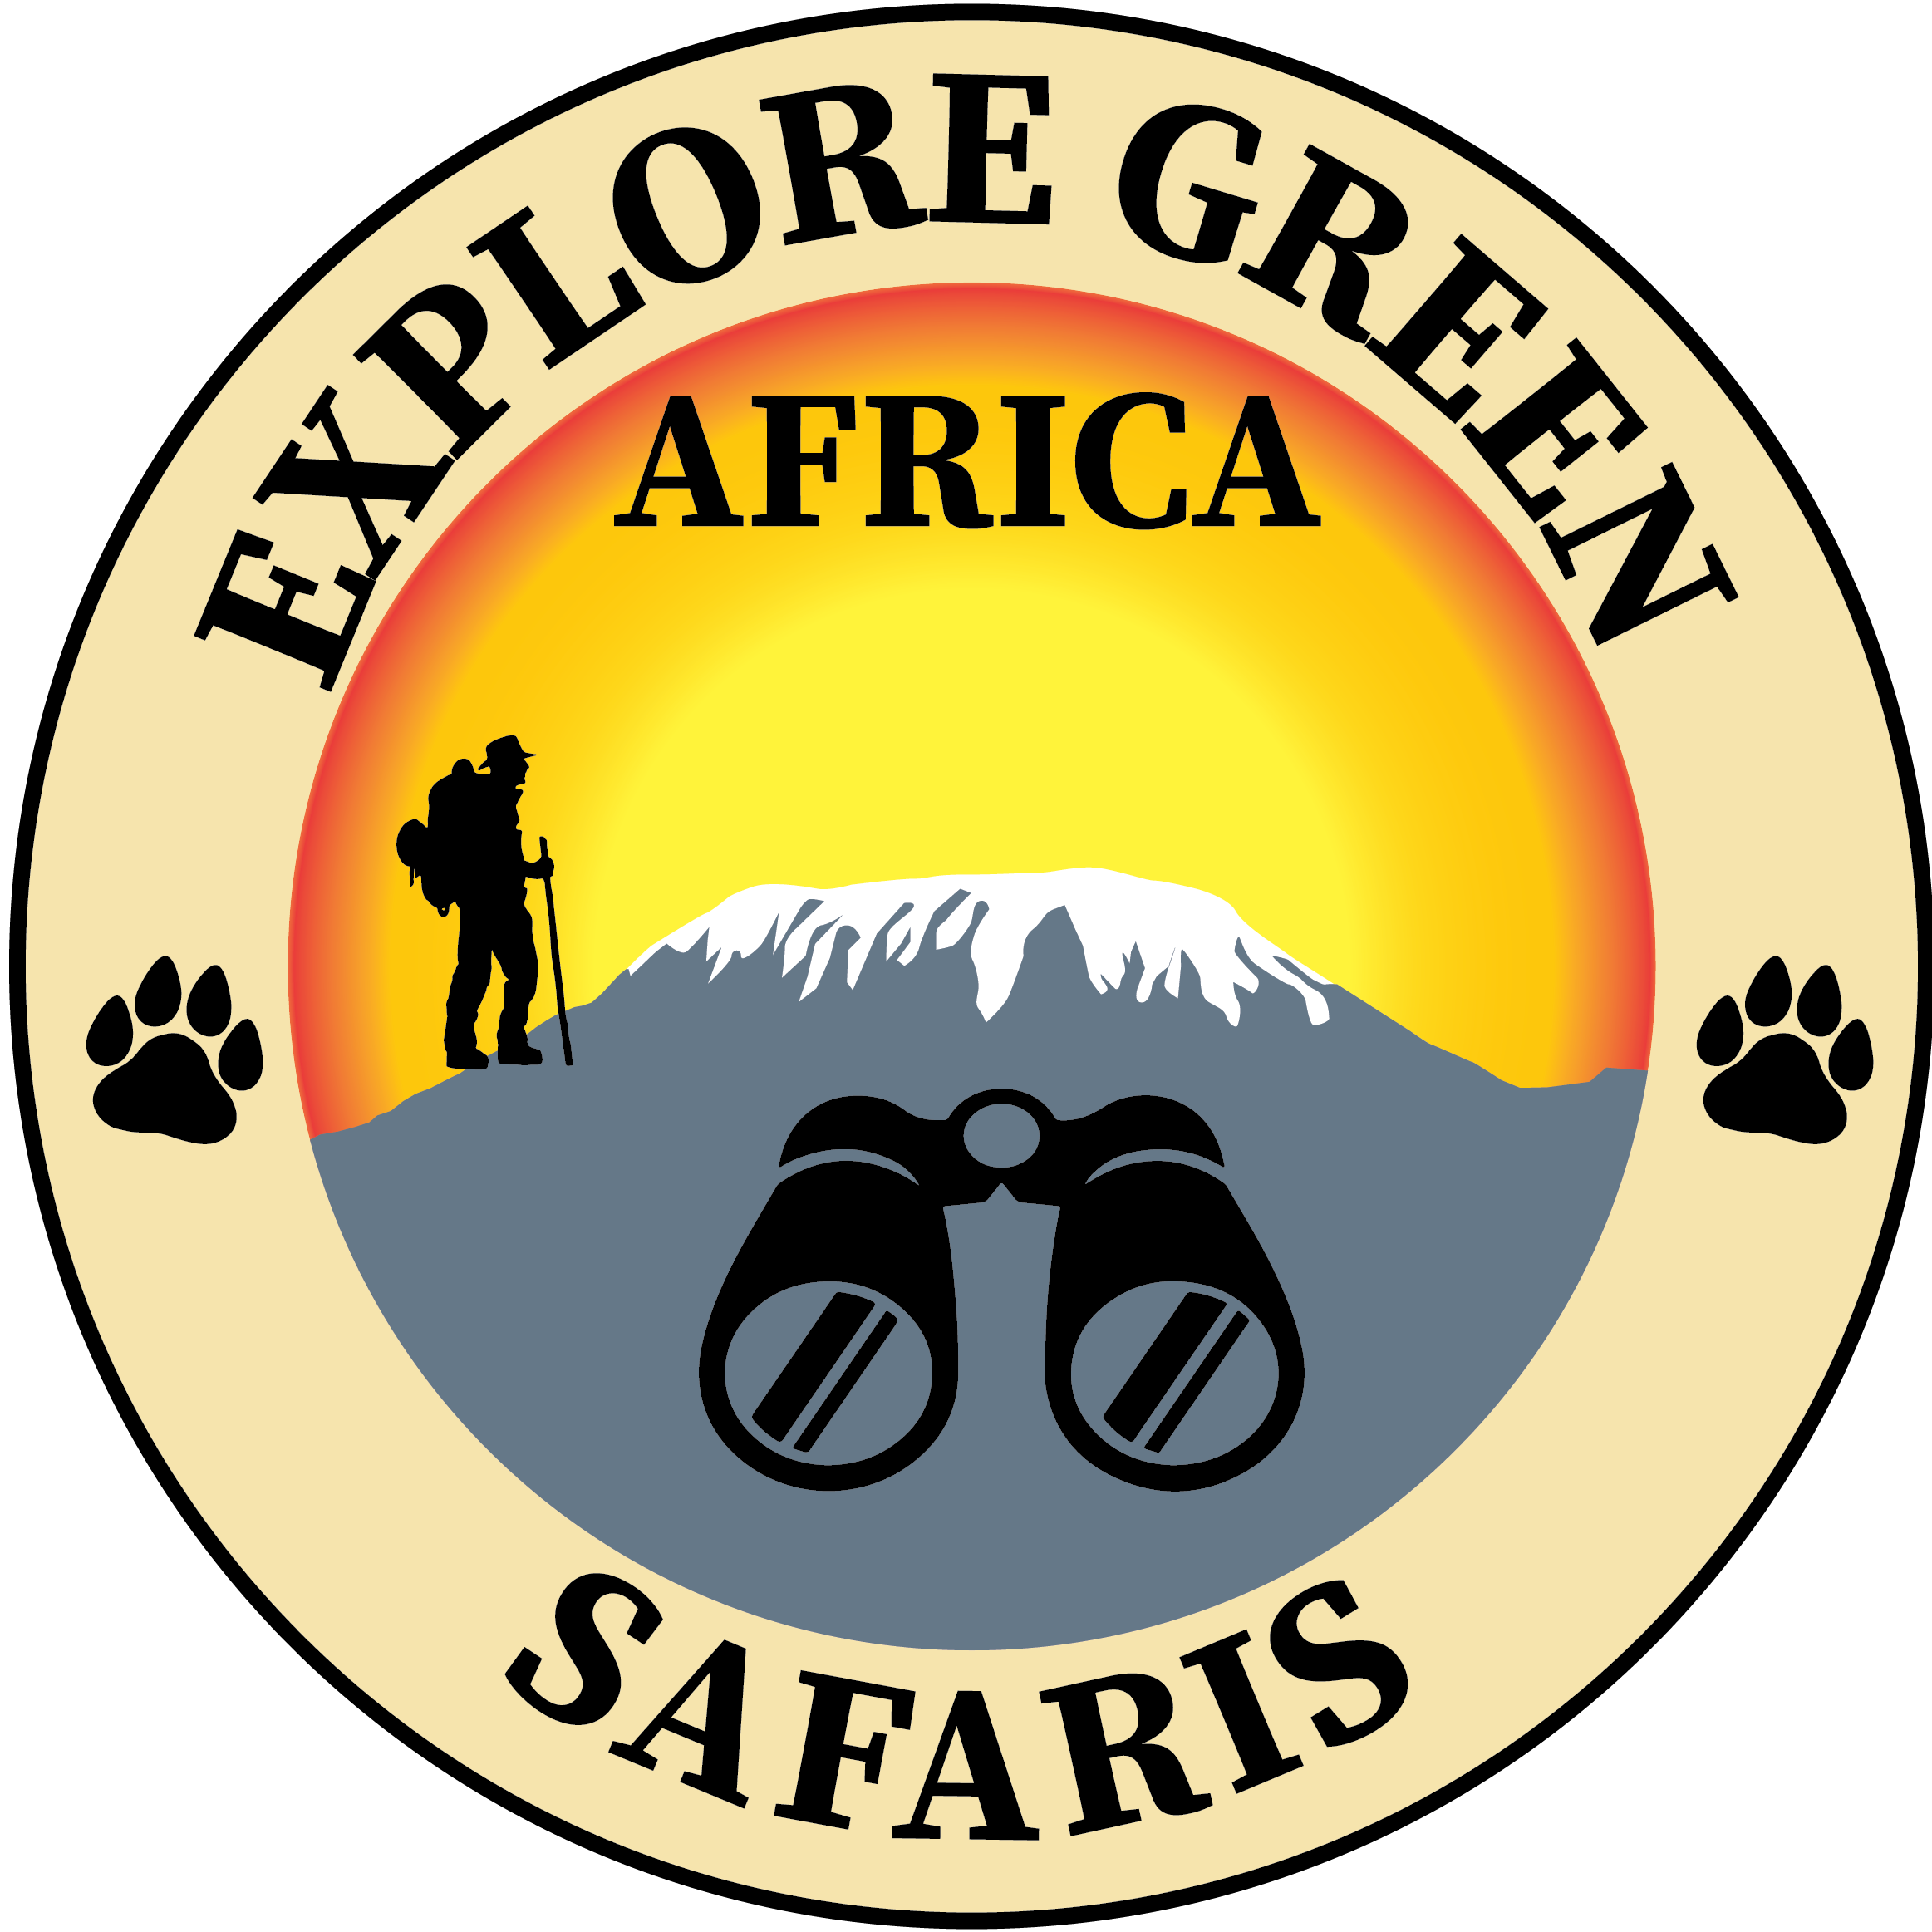 Explore Green Africa Safaris